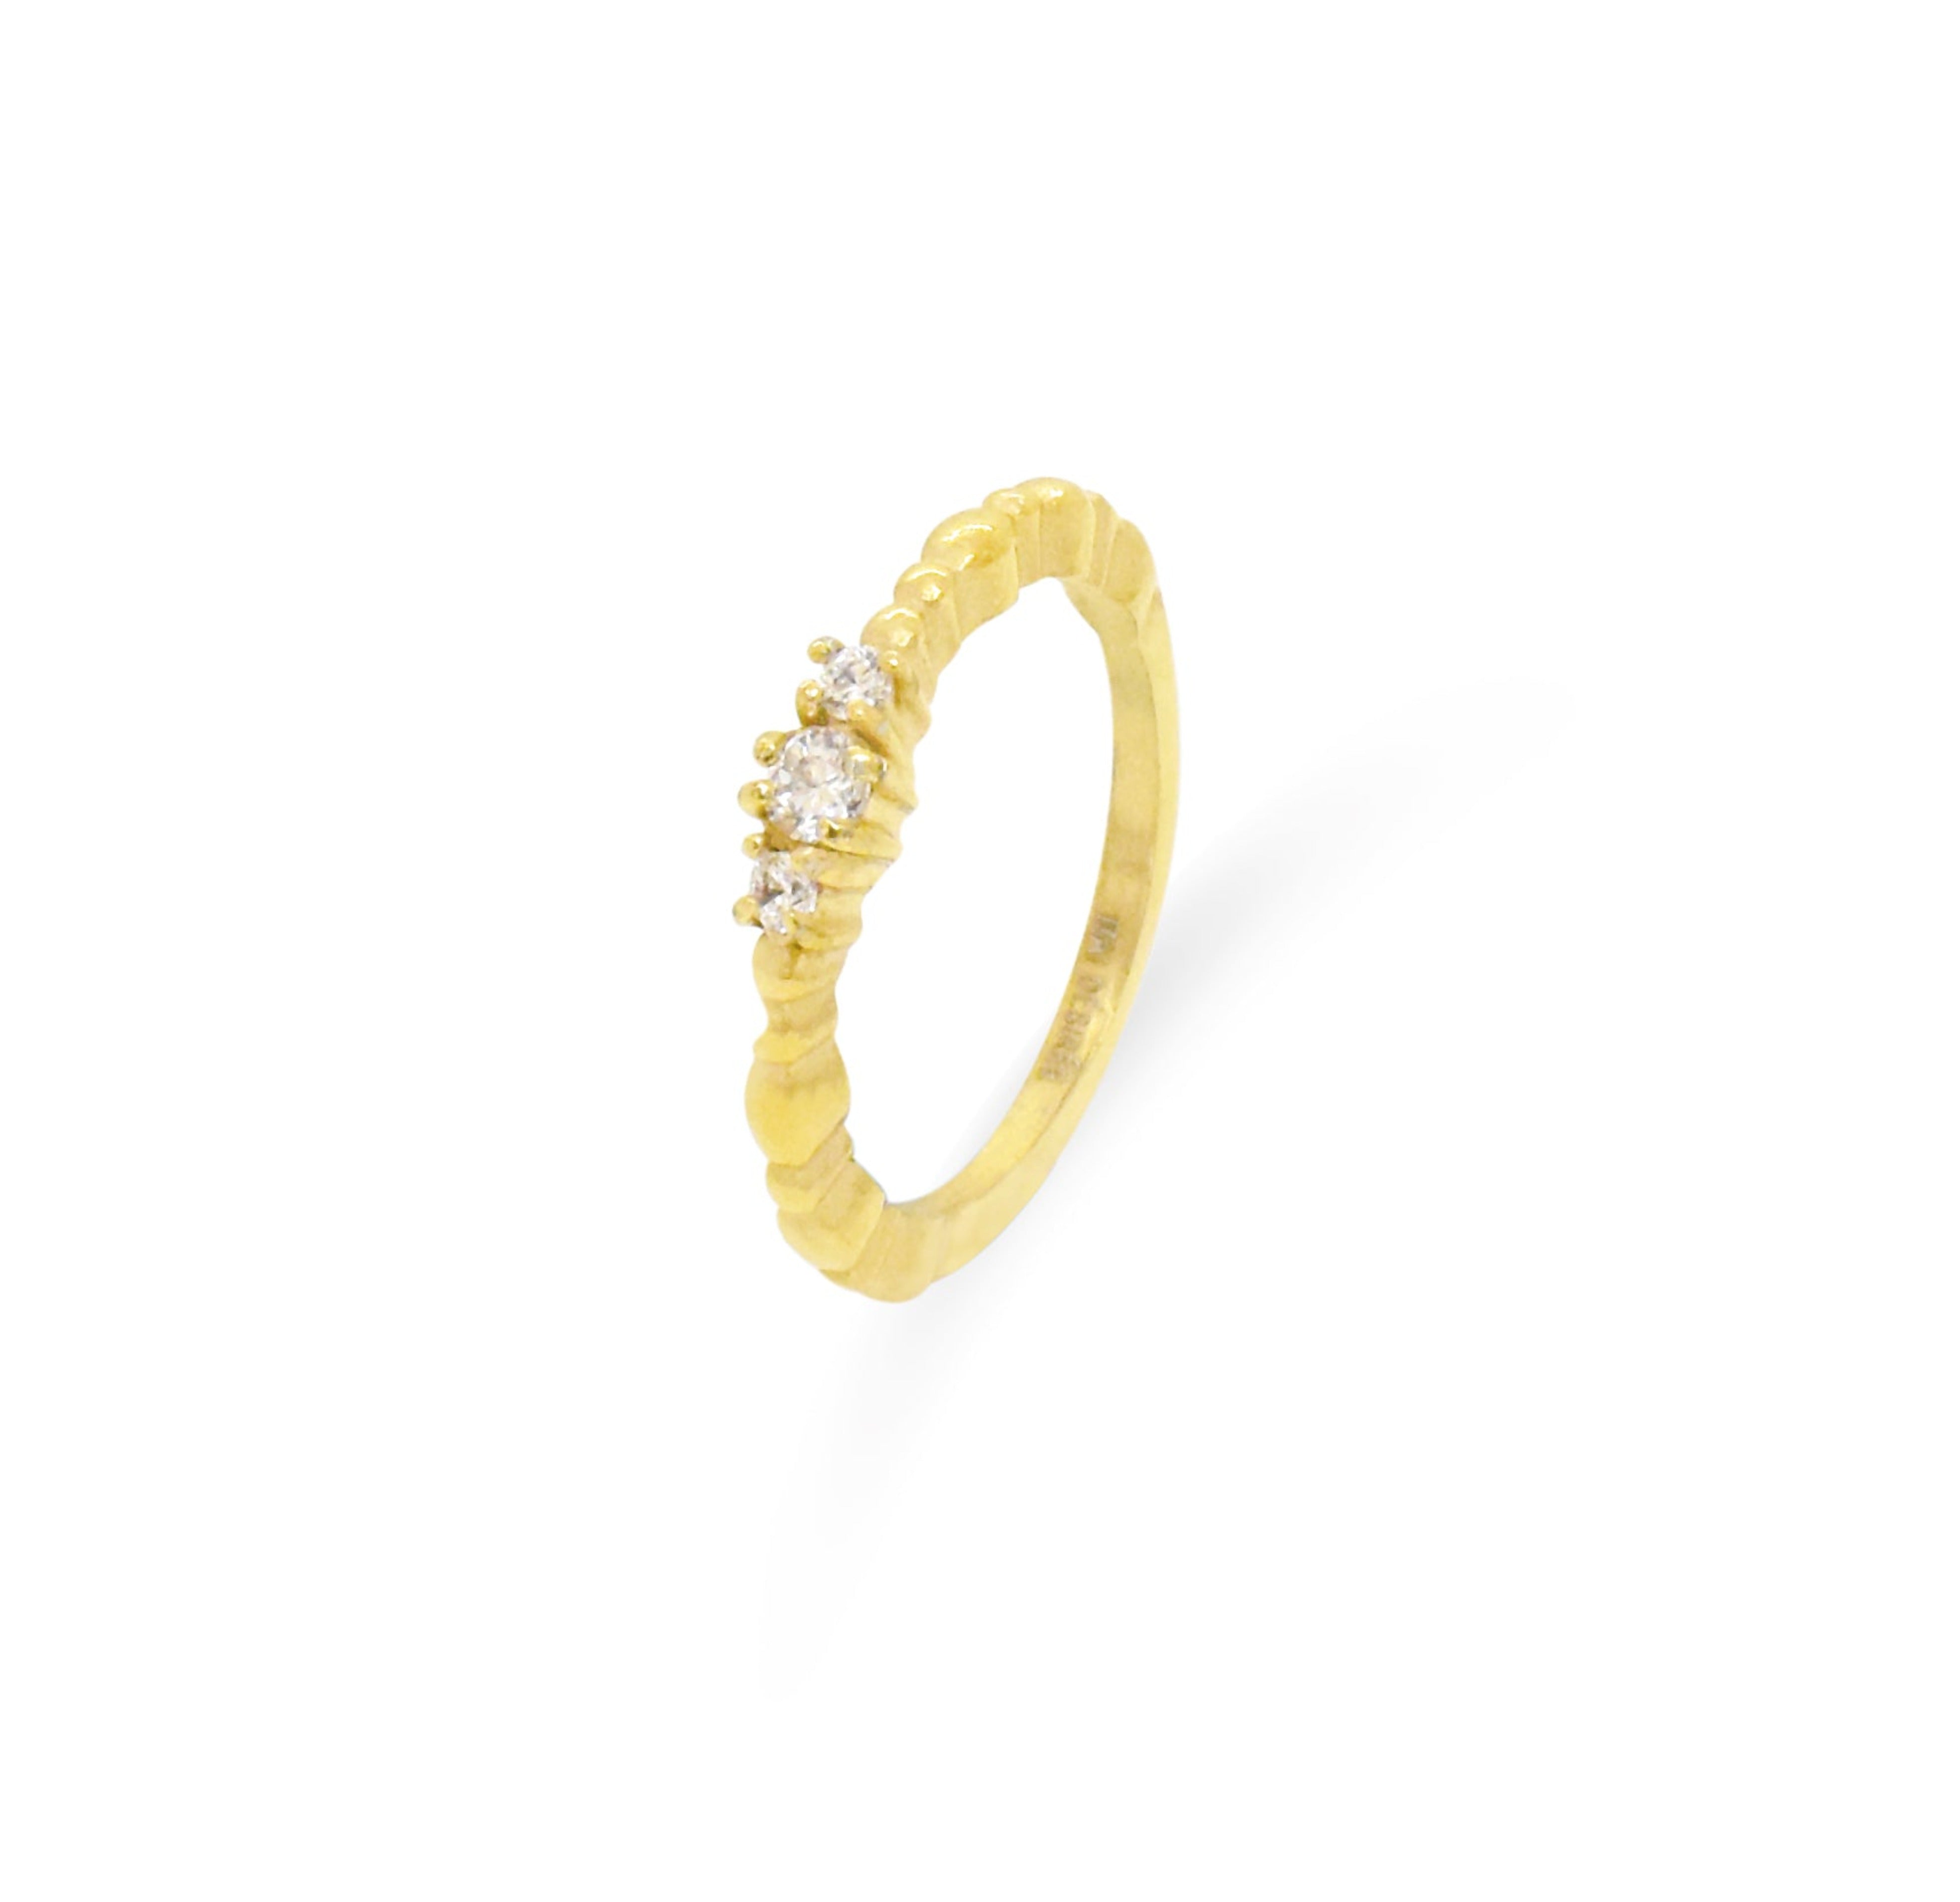 Celeste gold dainty trim stone ring waterproof jewelry